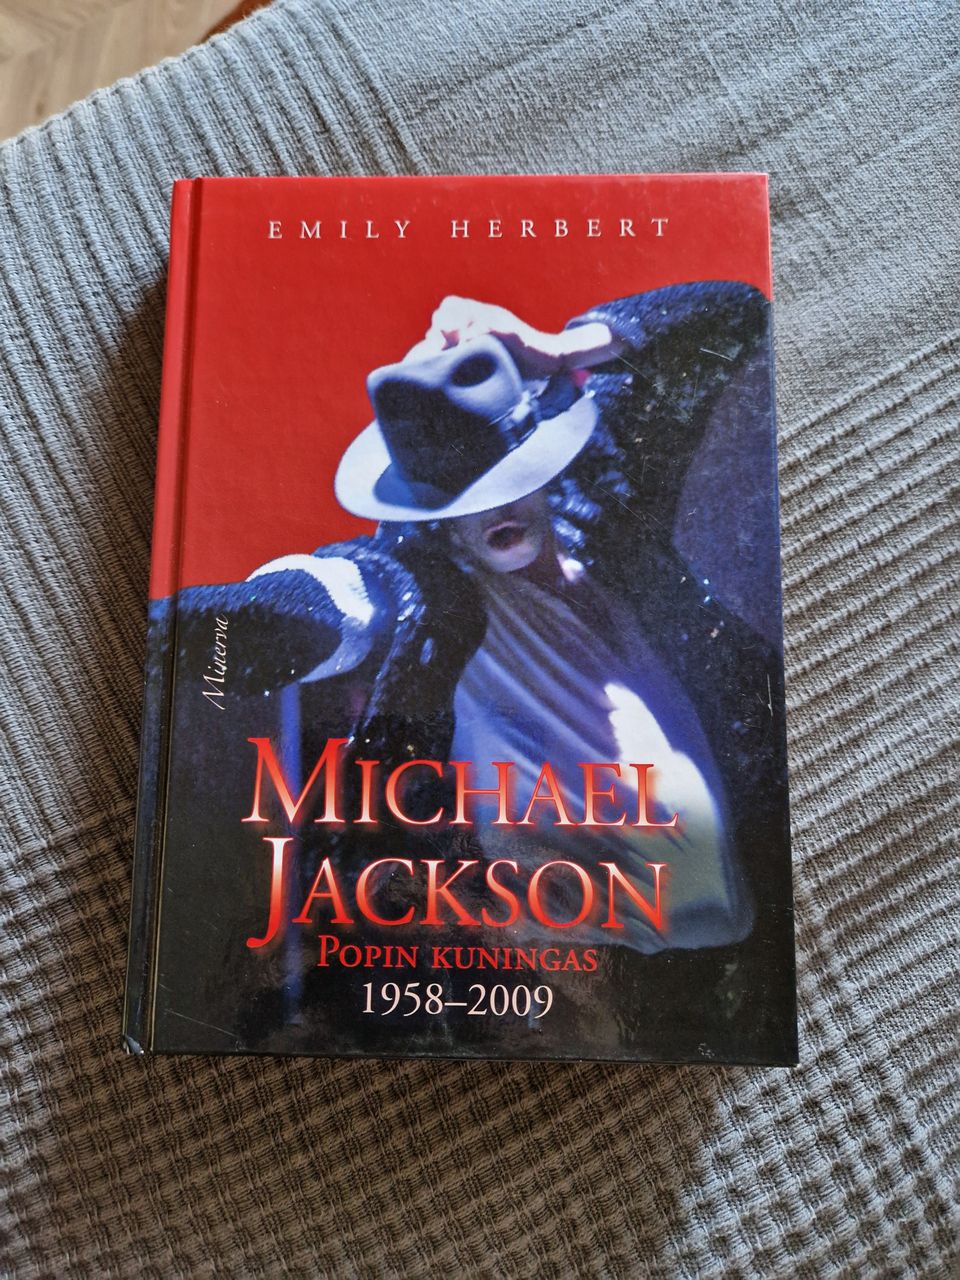 Michael Jackson popin kuningas, Emily Herbert